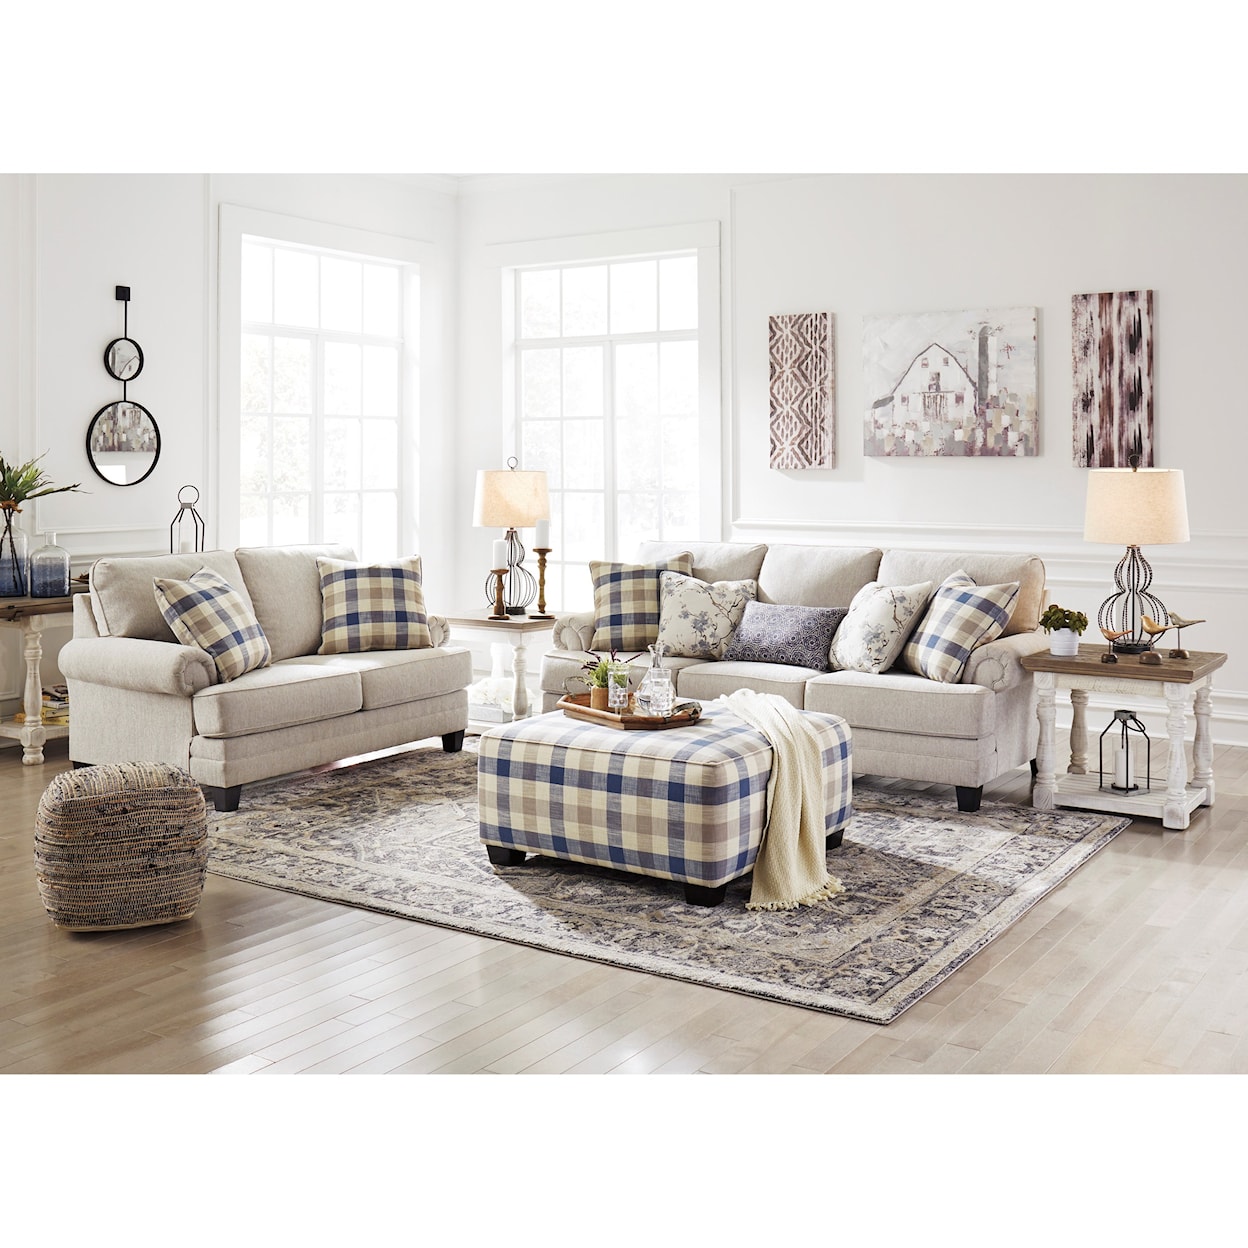 Ashley Furniture Benchcraft Meggett Oversized Accent Ottoman